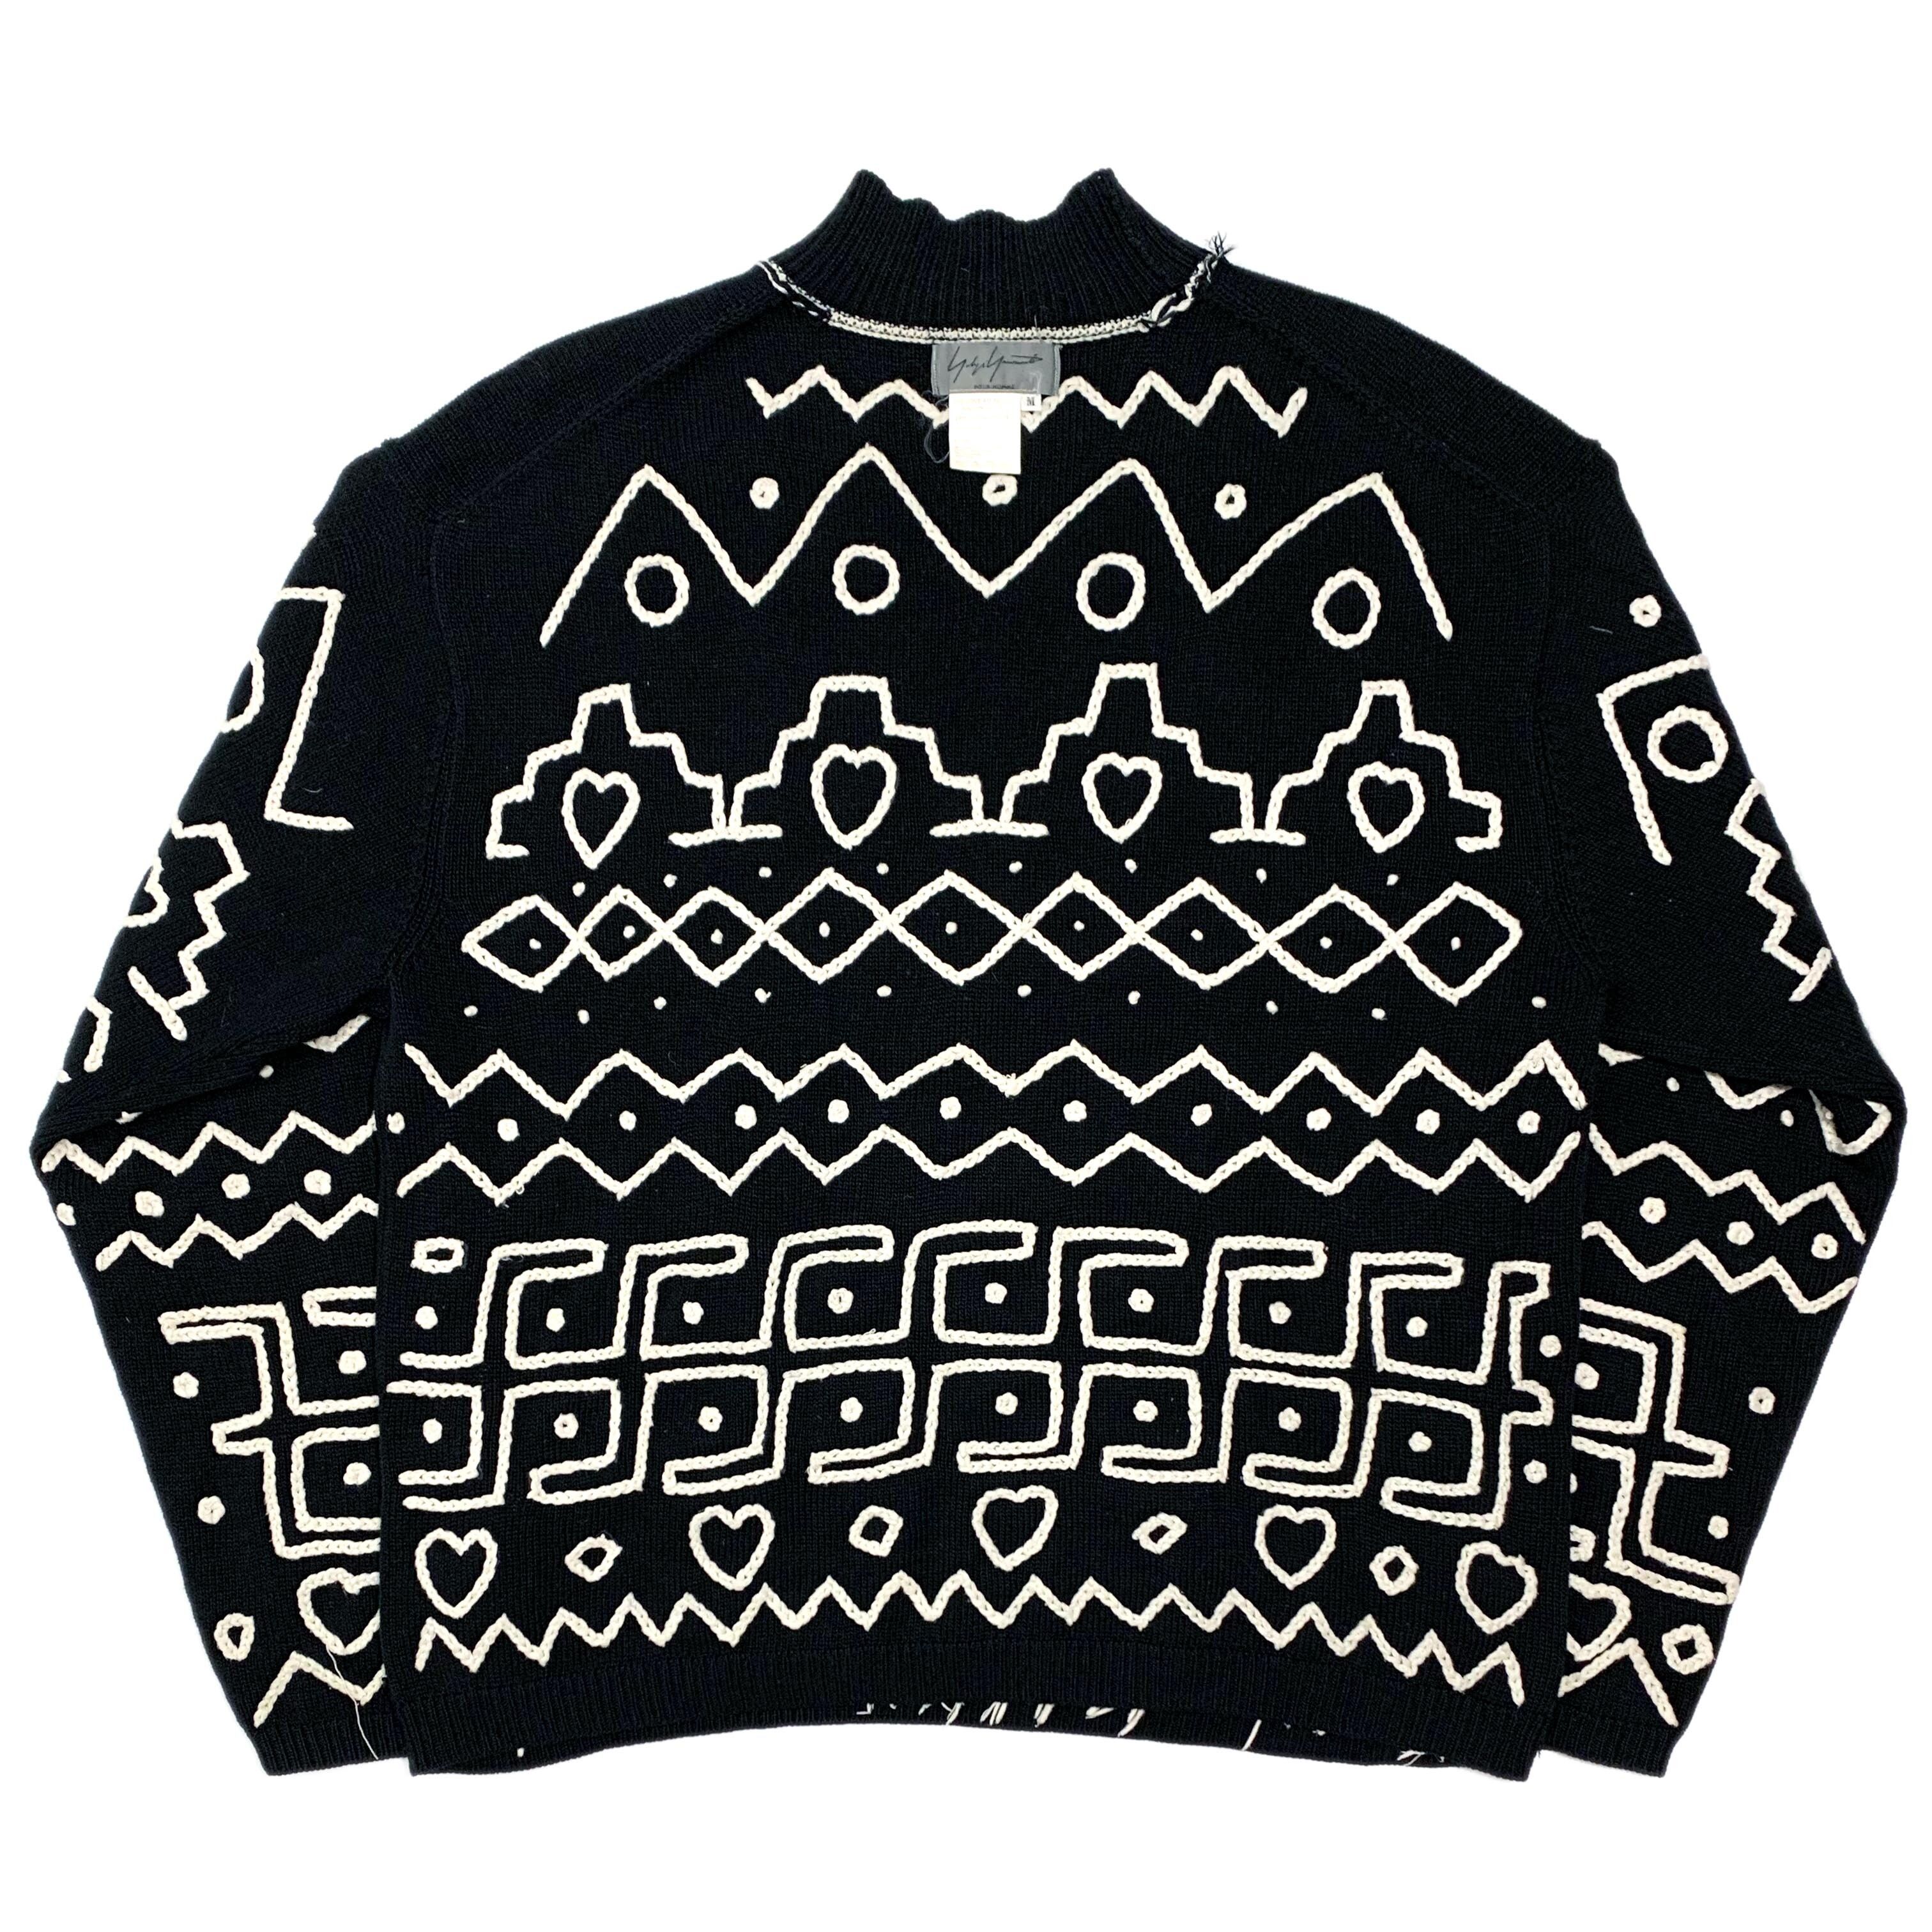 SS93 Crocodile Cotton Sweater - 4